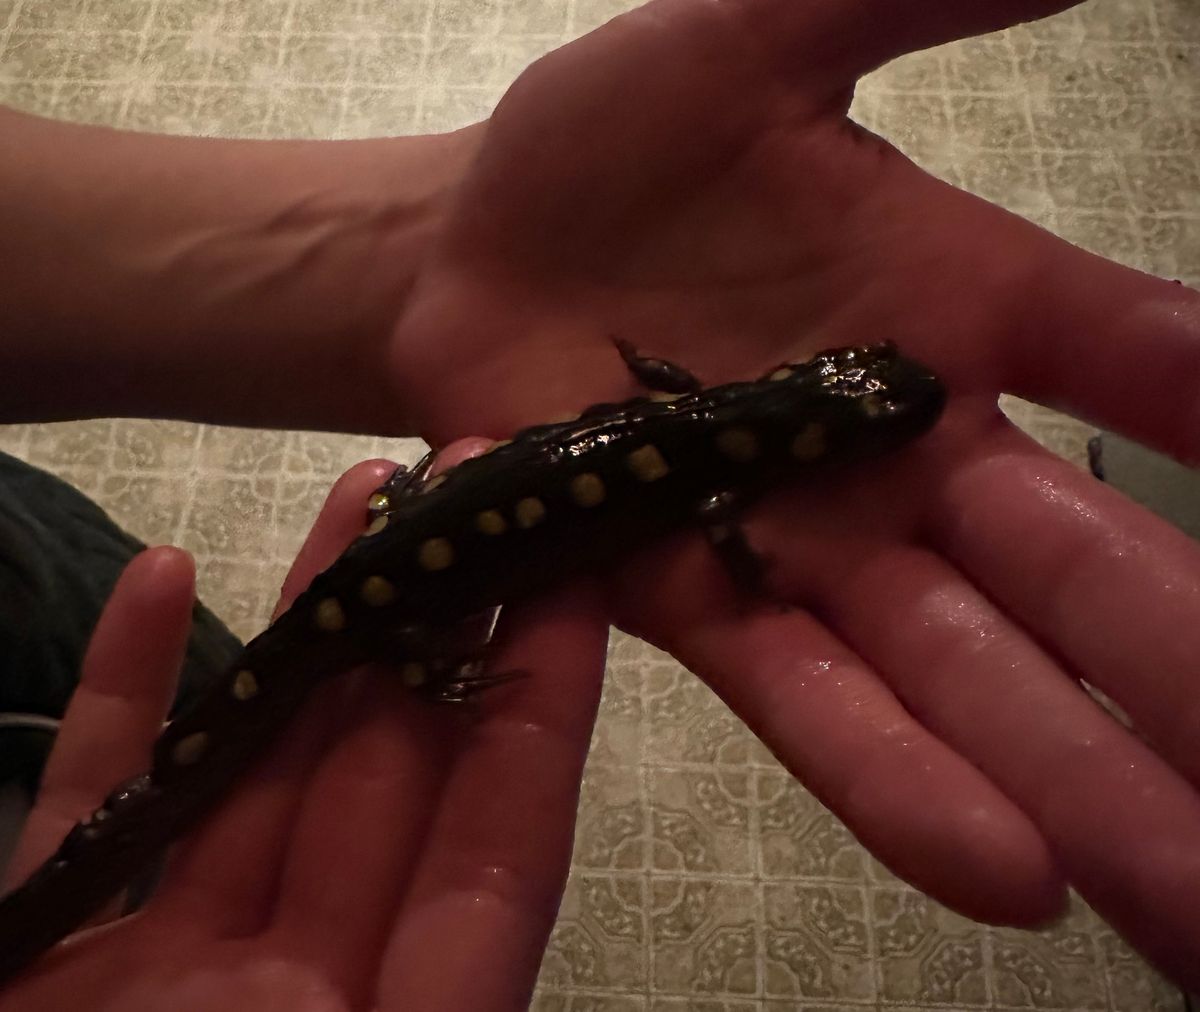 Big Night - salamander casualties despite some human intervention